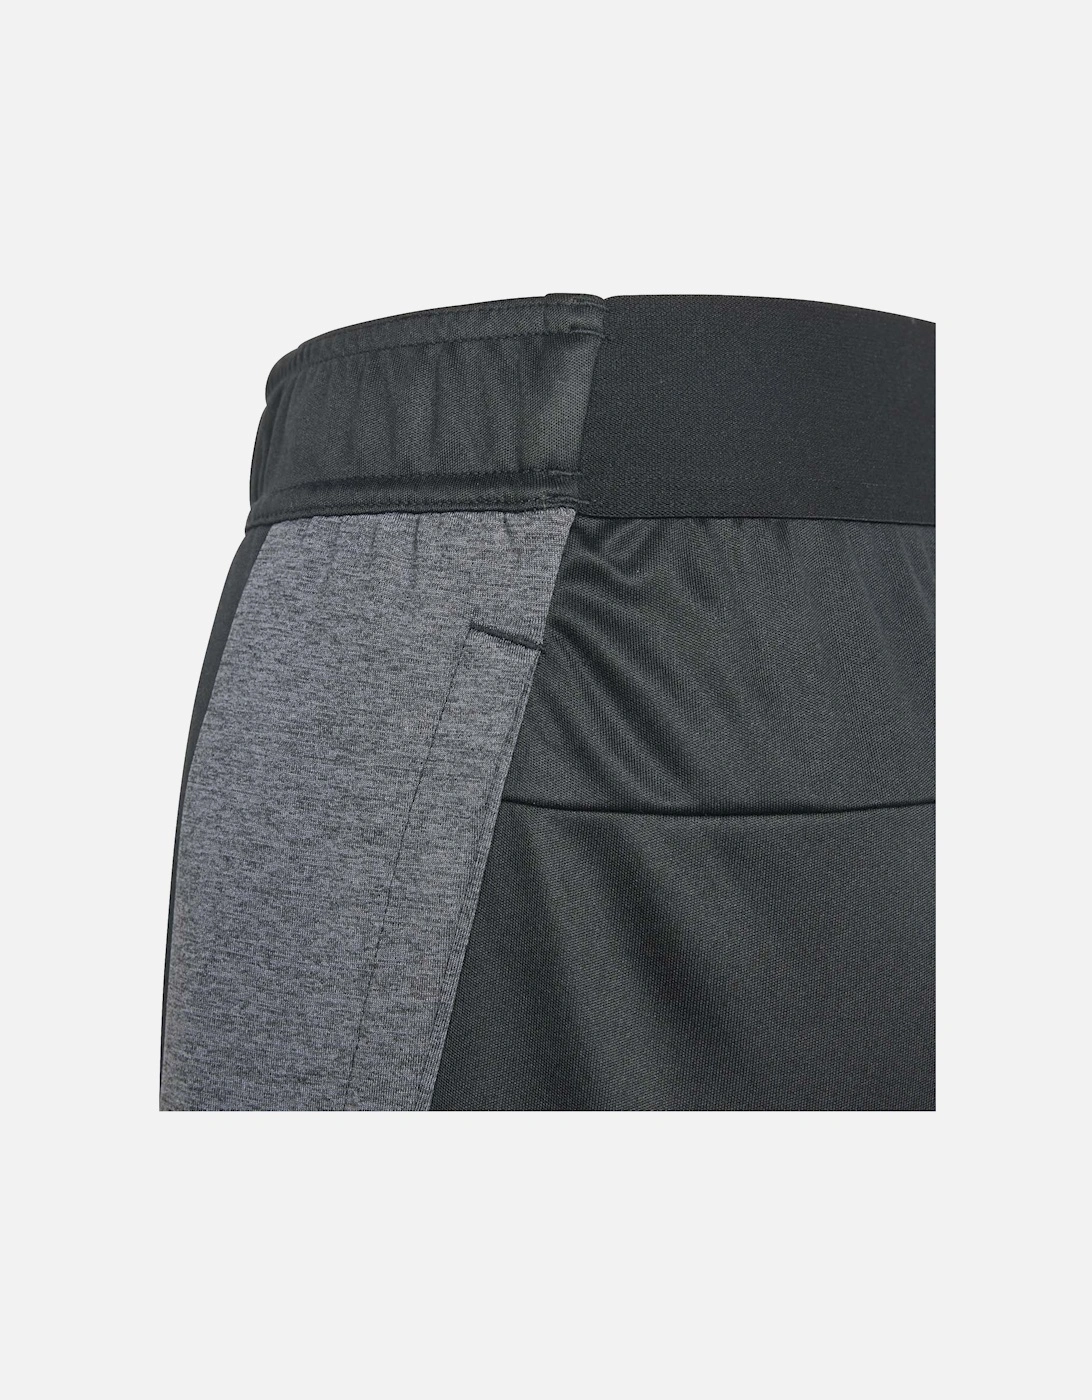 Juniors Heathered Shorts (Black/Grey)